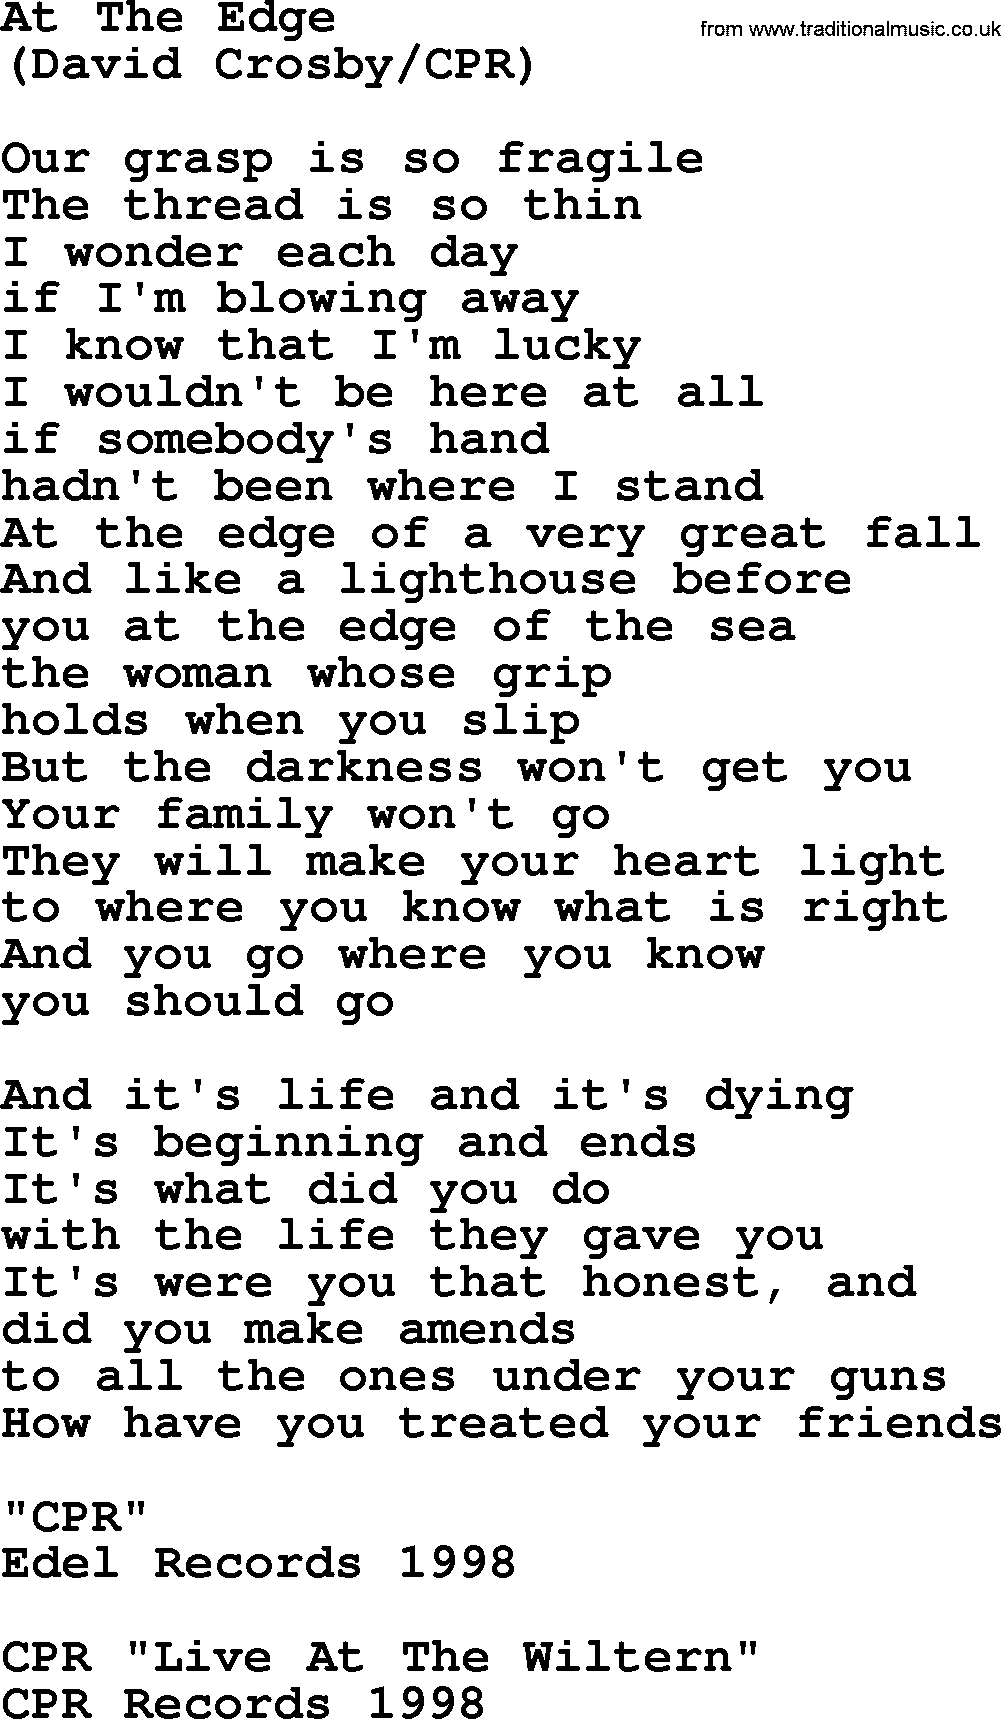 The Byrds song At The Edge, lyrics